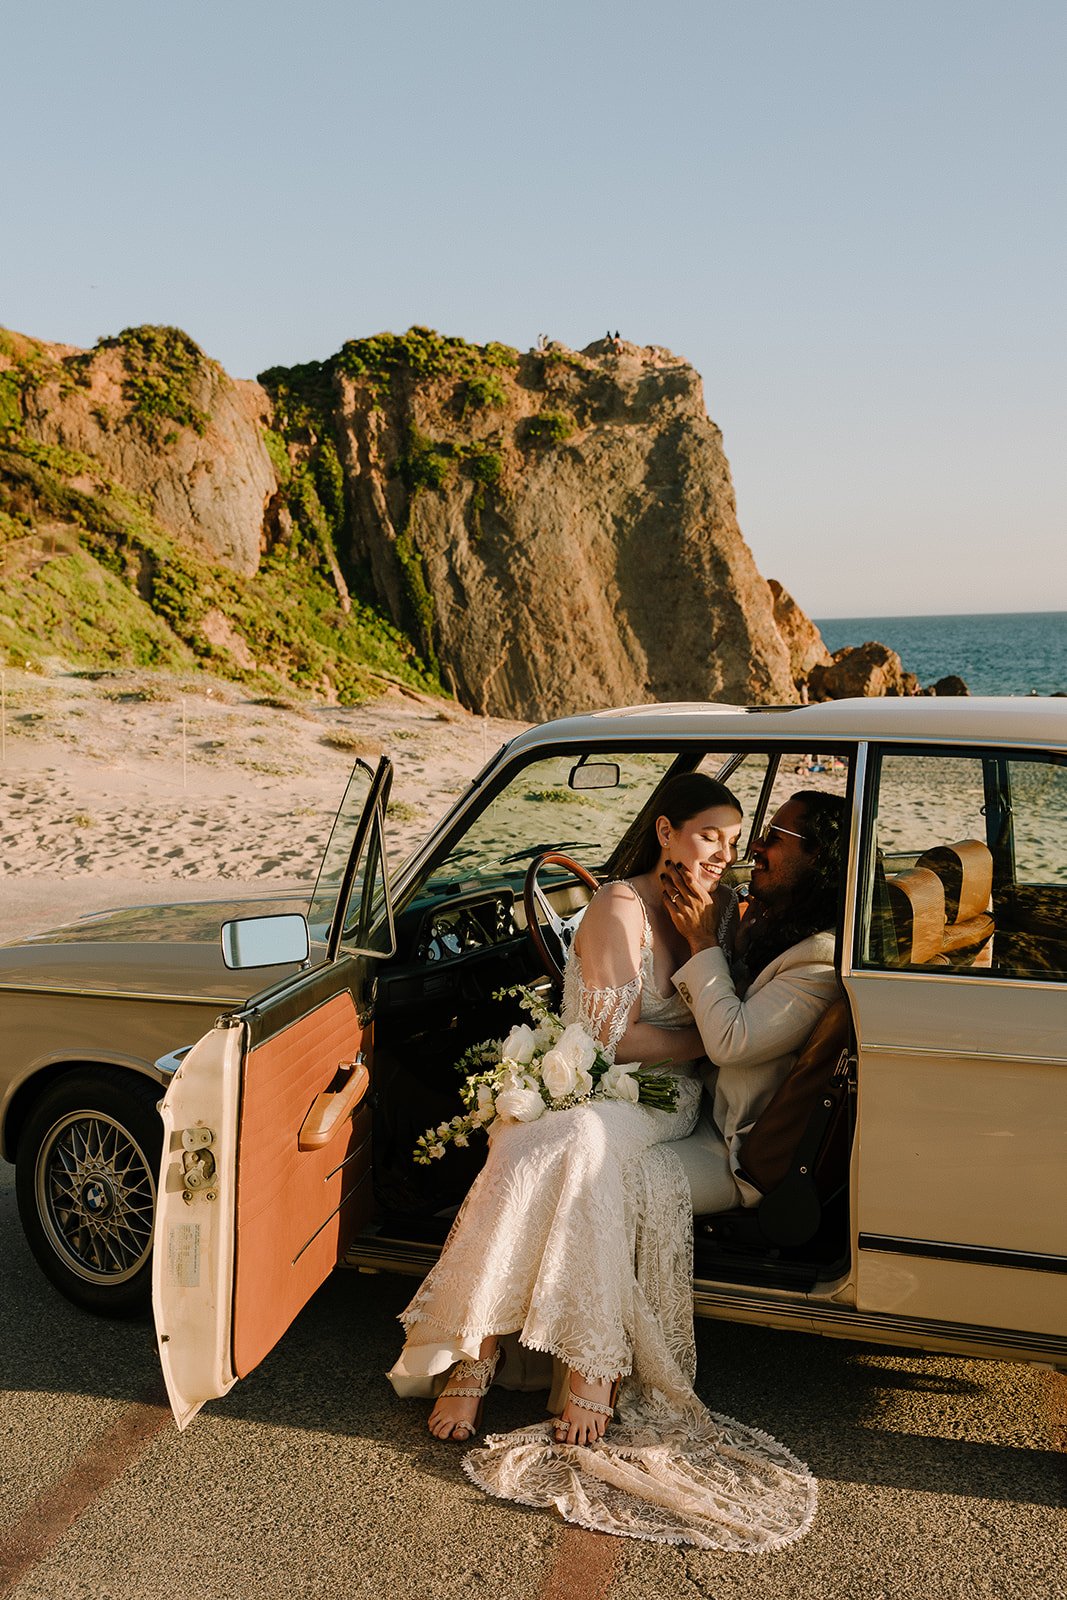 Intimate Malibu Elopement on The Beach - Natalie Nicole Photo - Destination Wedding Photographer (106).jpg